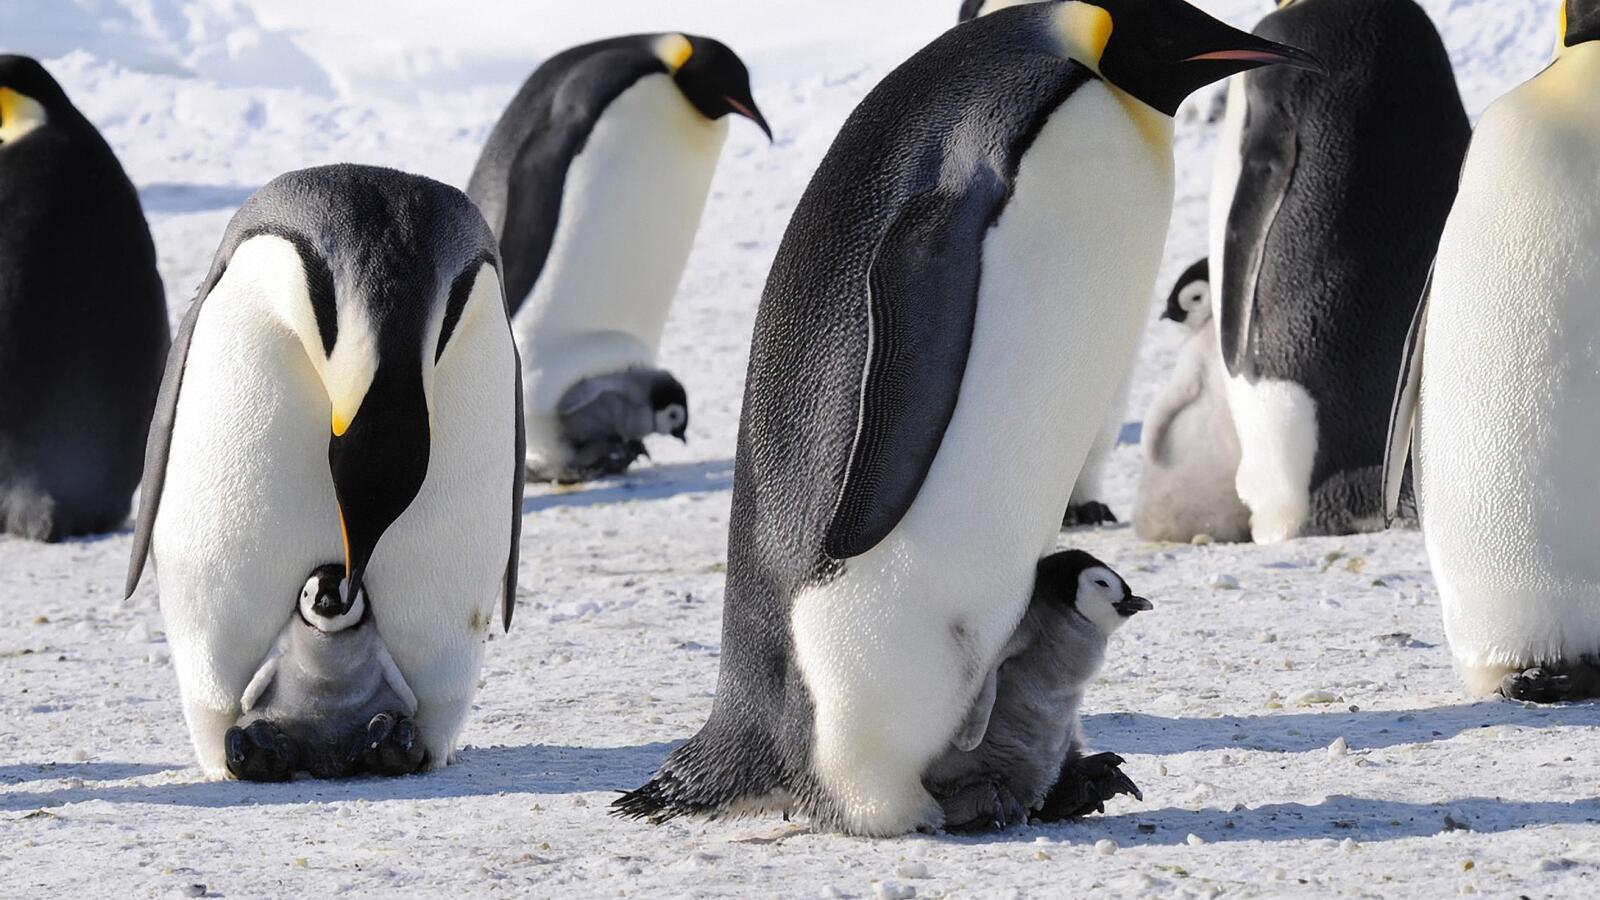 Wallpapers drop penguins family on the desktop